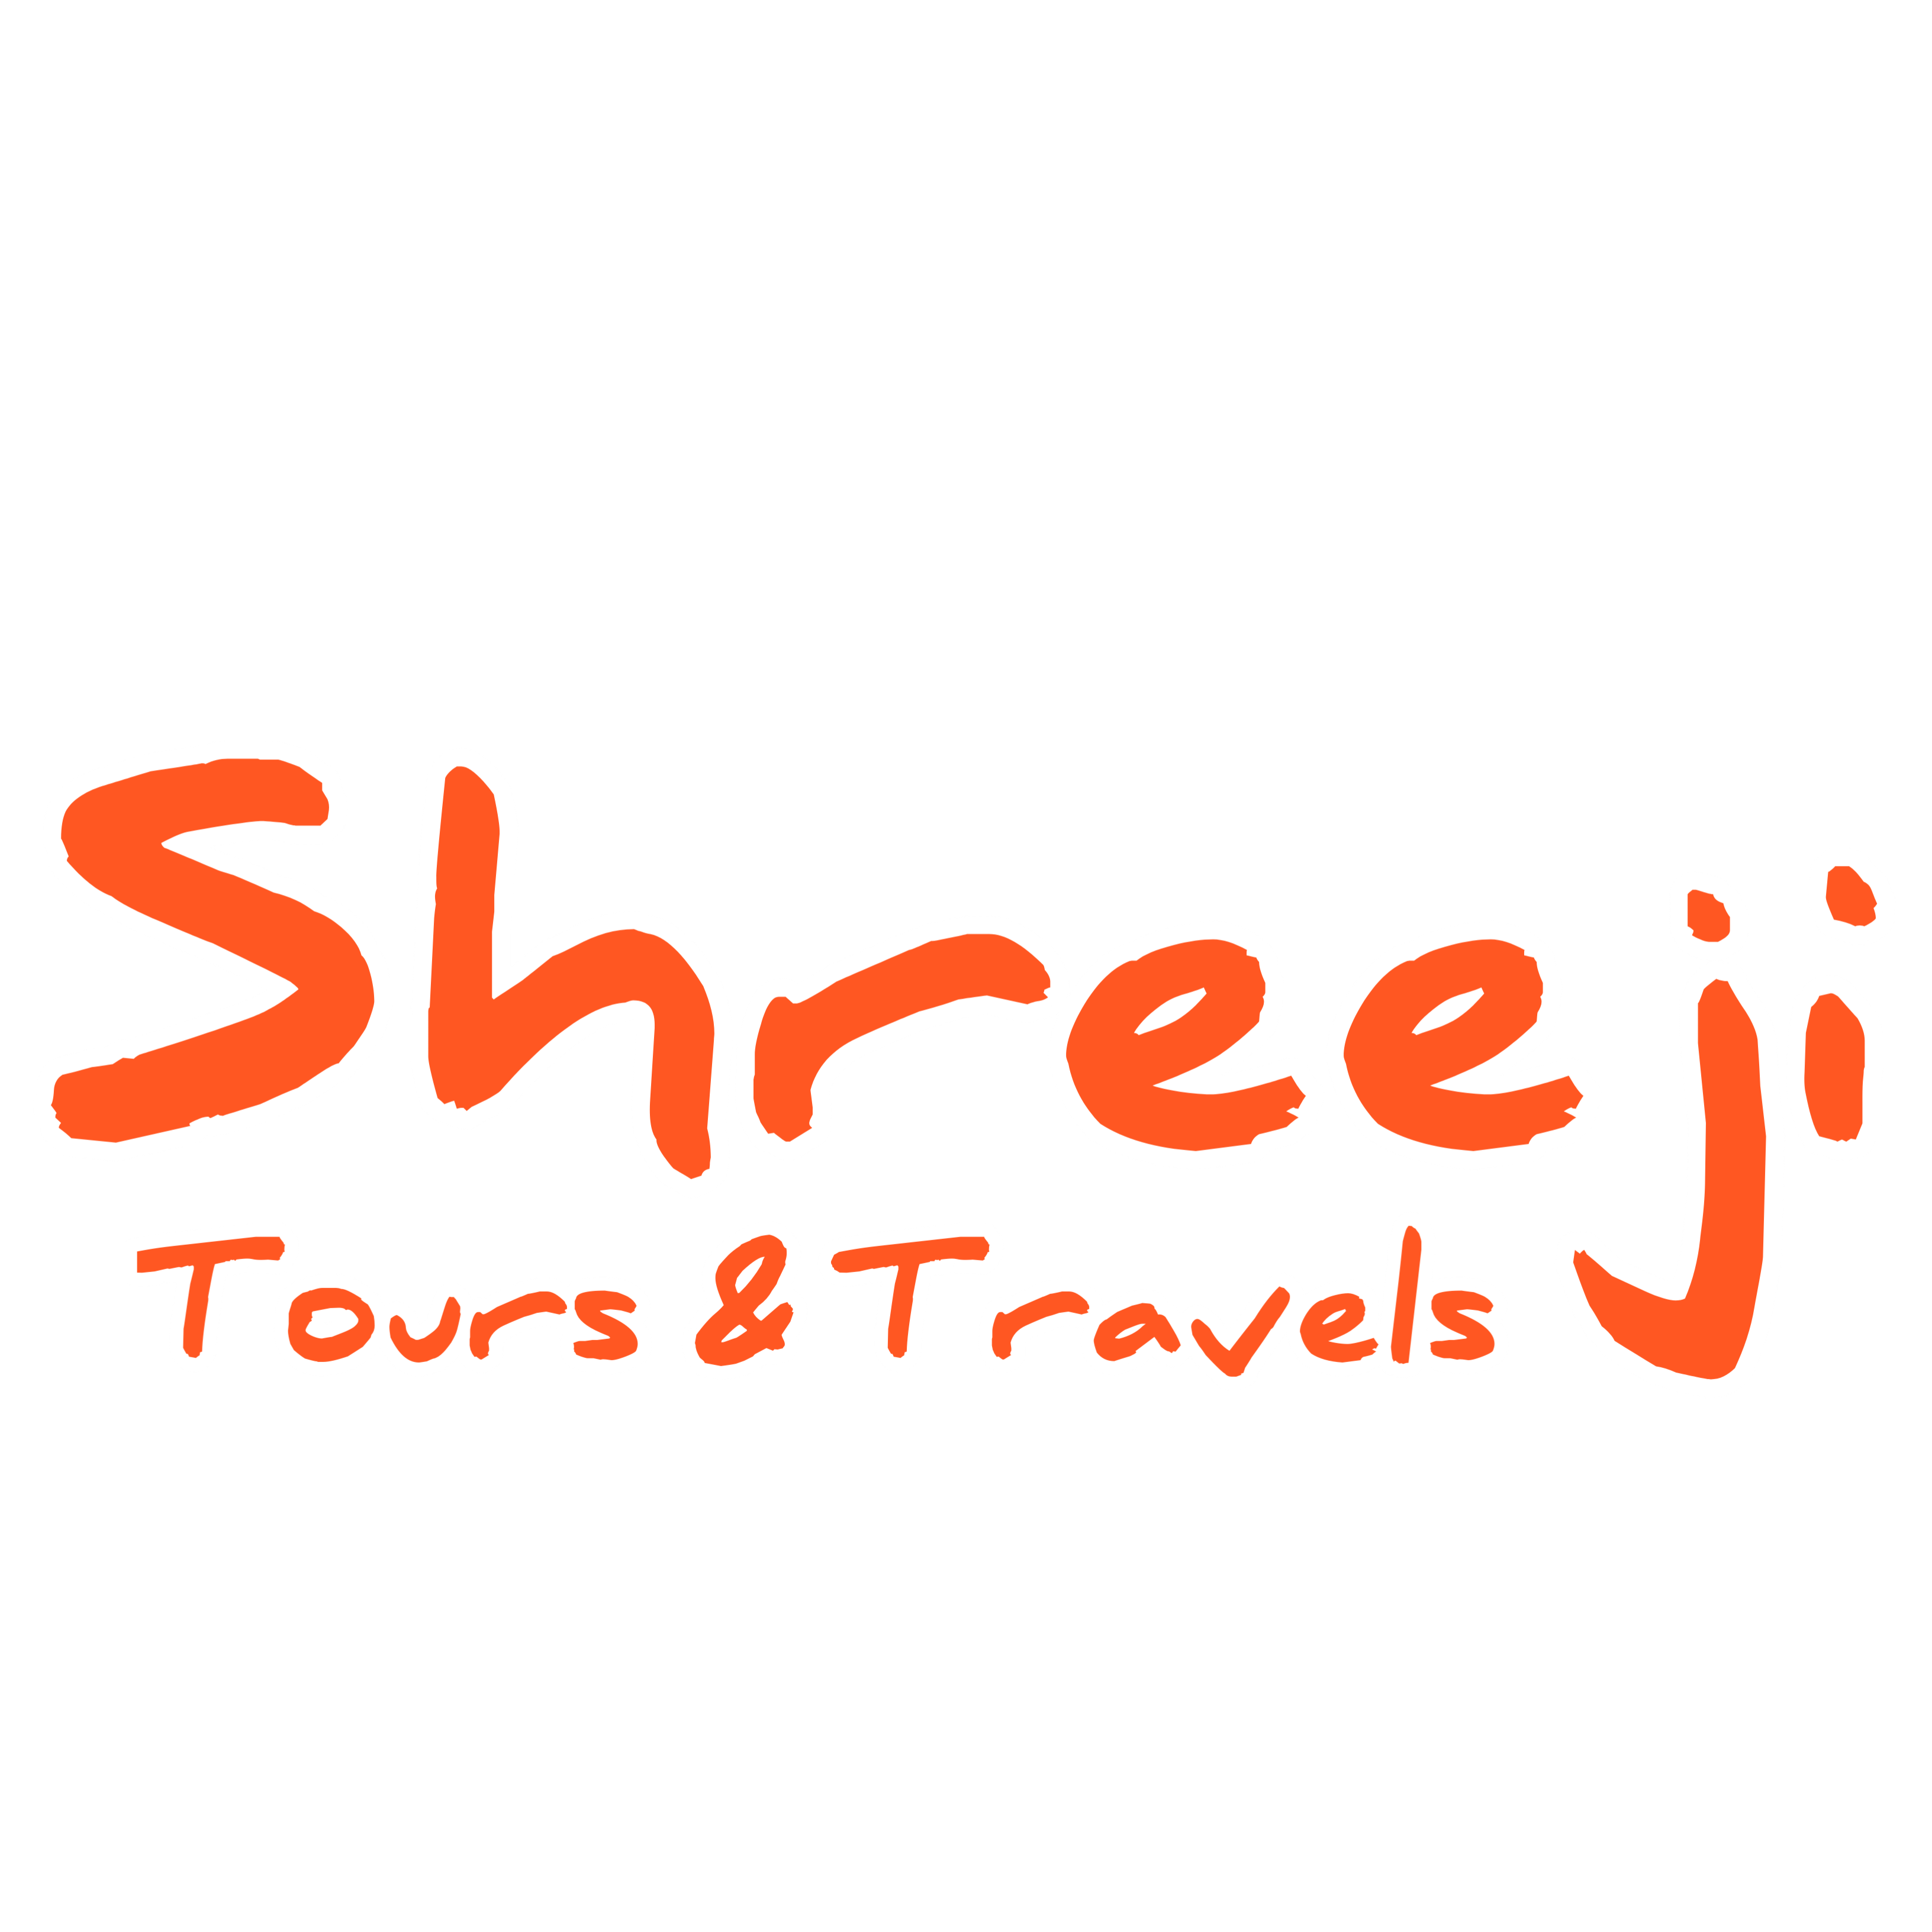 Shreeji Tours & Travels